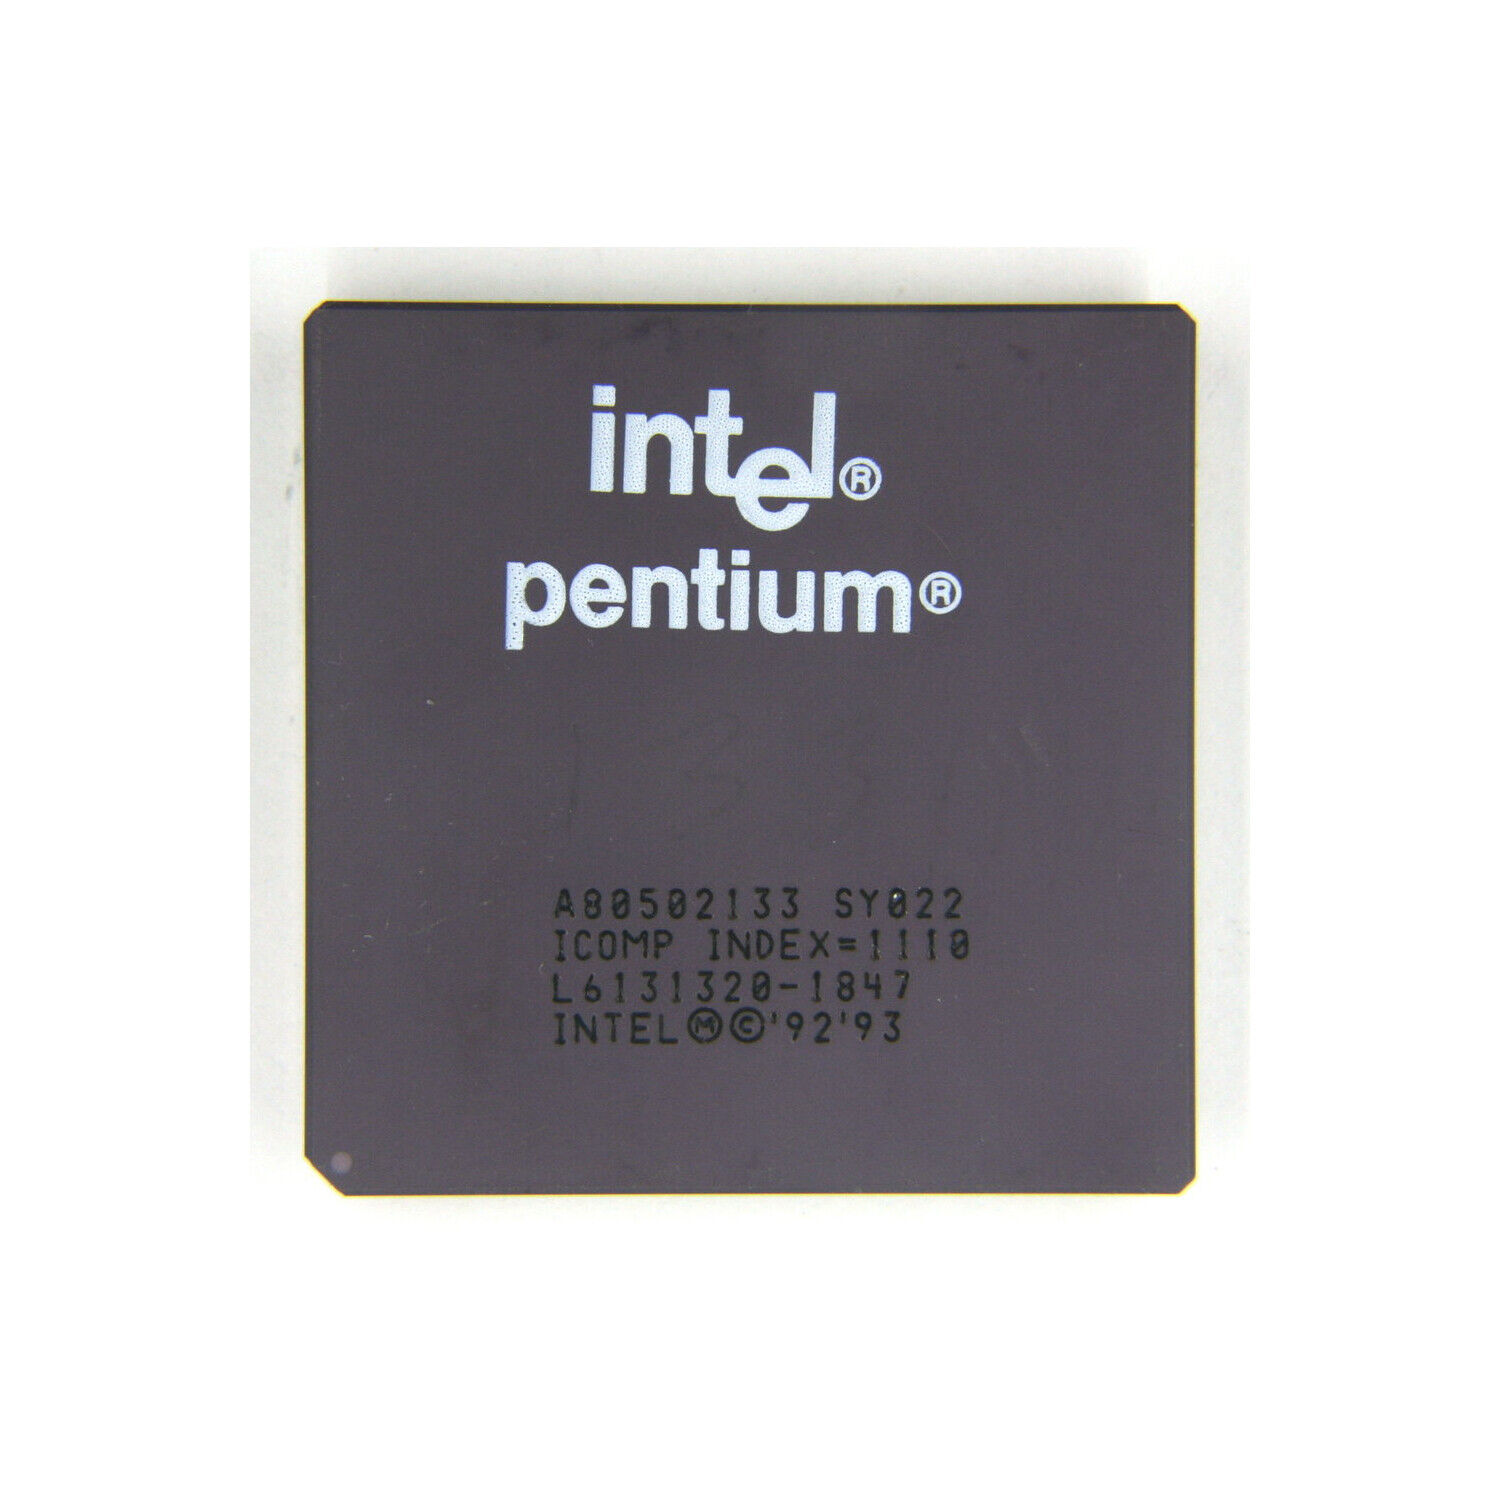 Intel Pentium 133MHz CPU Socket 5 & 7 A80502133 SY022